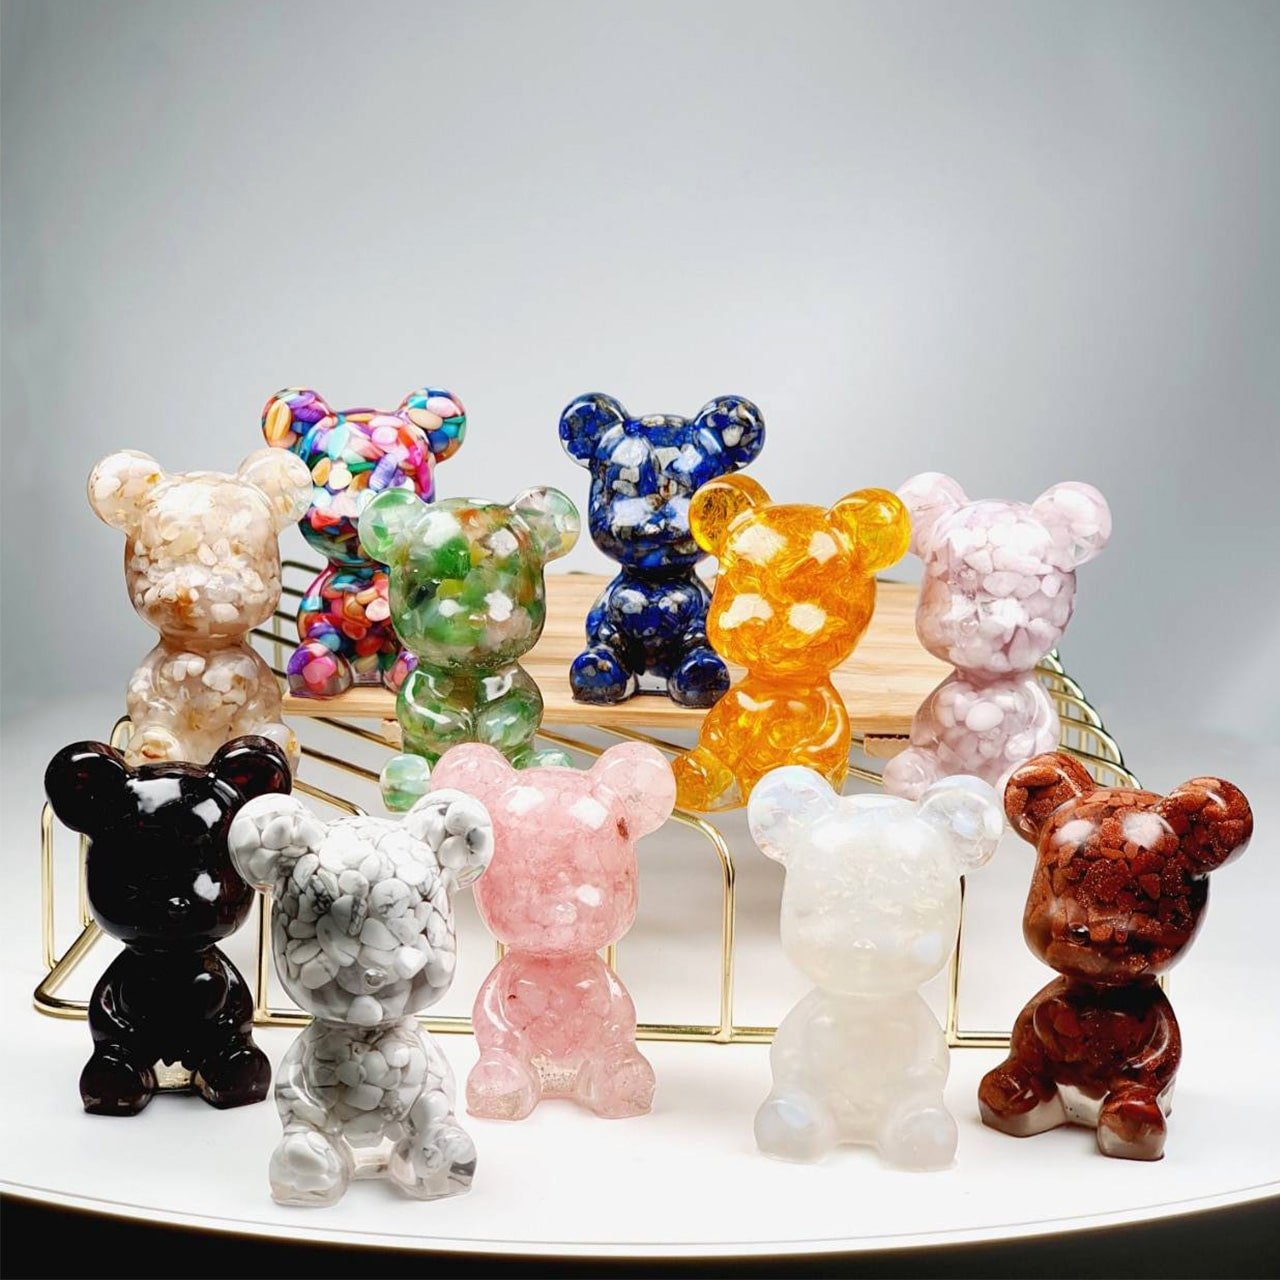 Bear Crystal Decoration - All Types